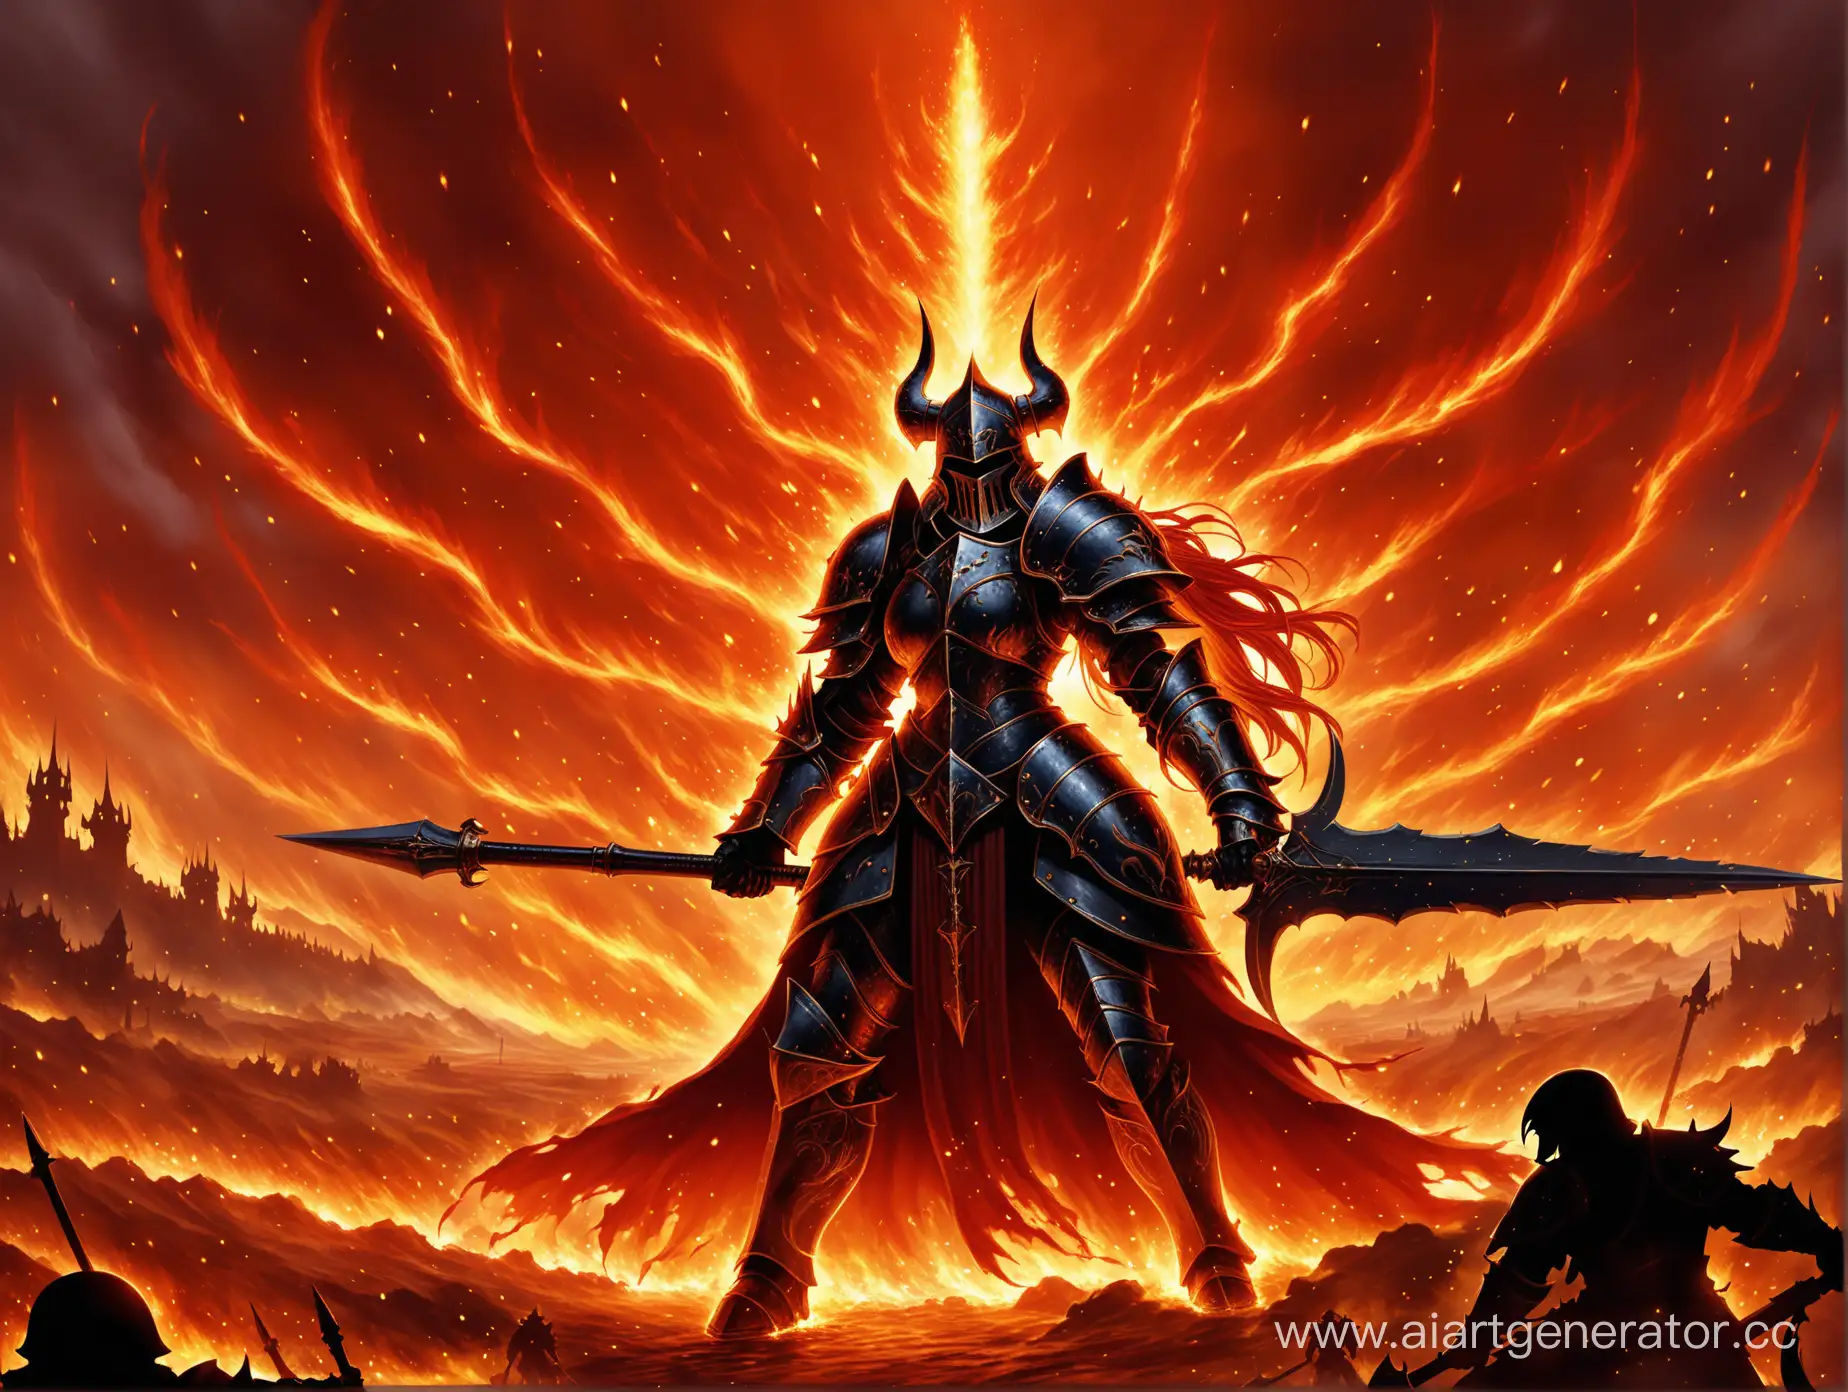 Fiery-Chaos-Warrior-Battling-Under-the-Watchful-Eye-of-the-Burning-Deity